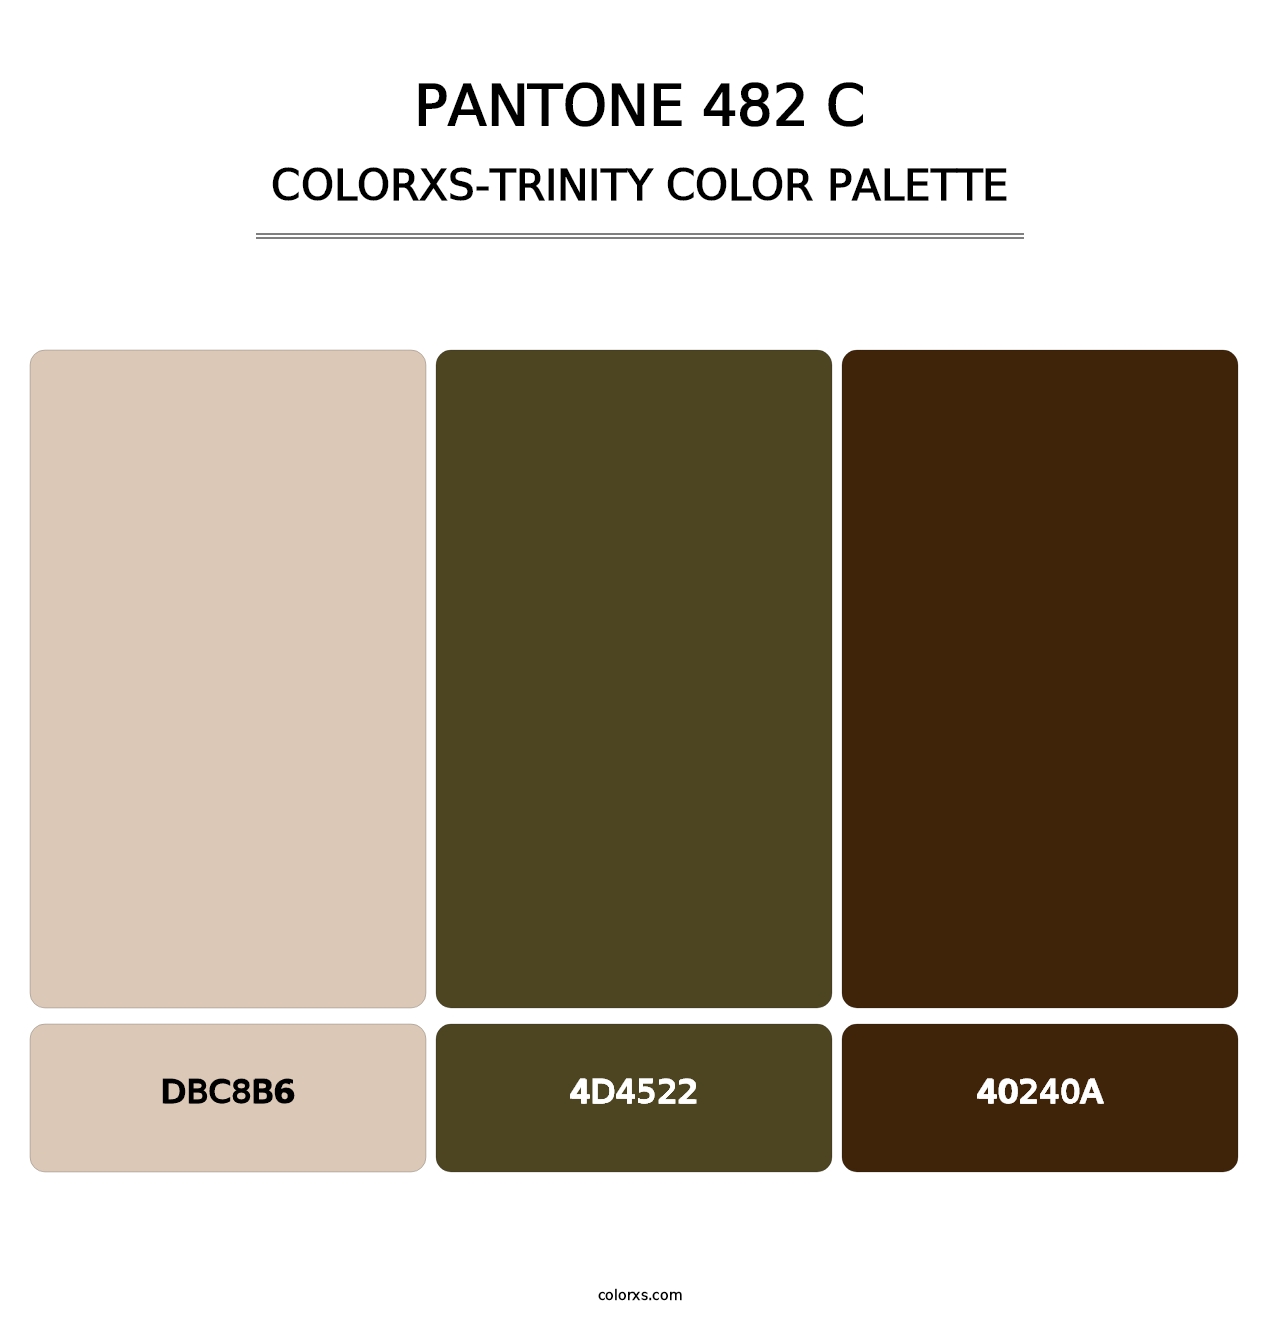 PANTONE 482 C - Colorxs Trinity Palette